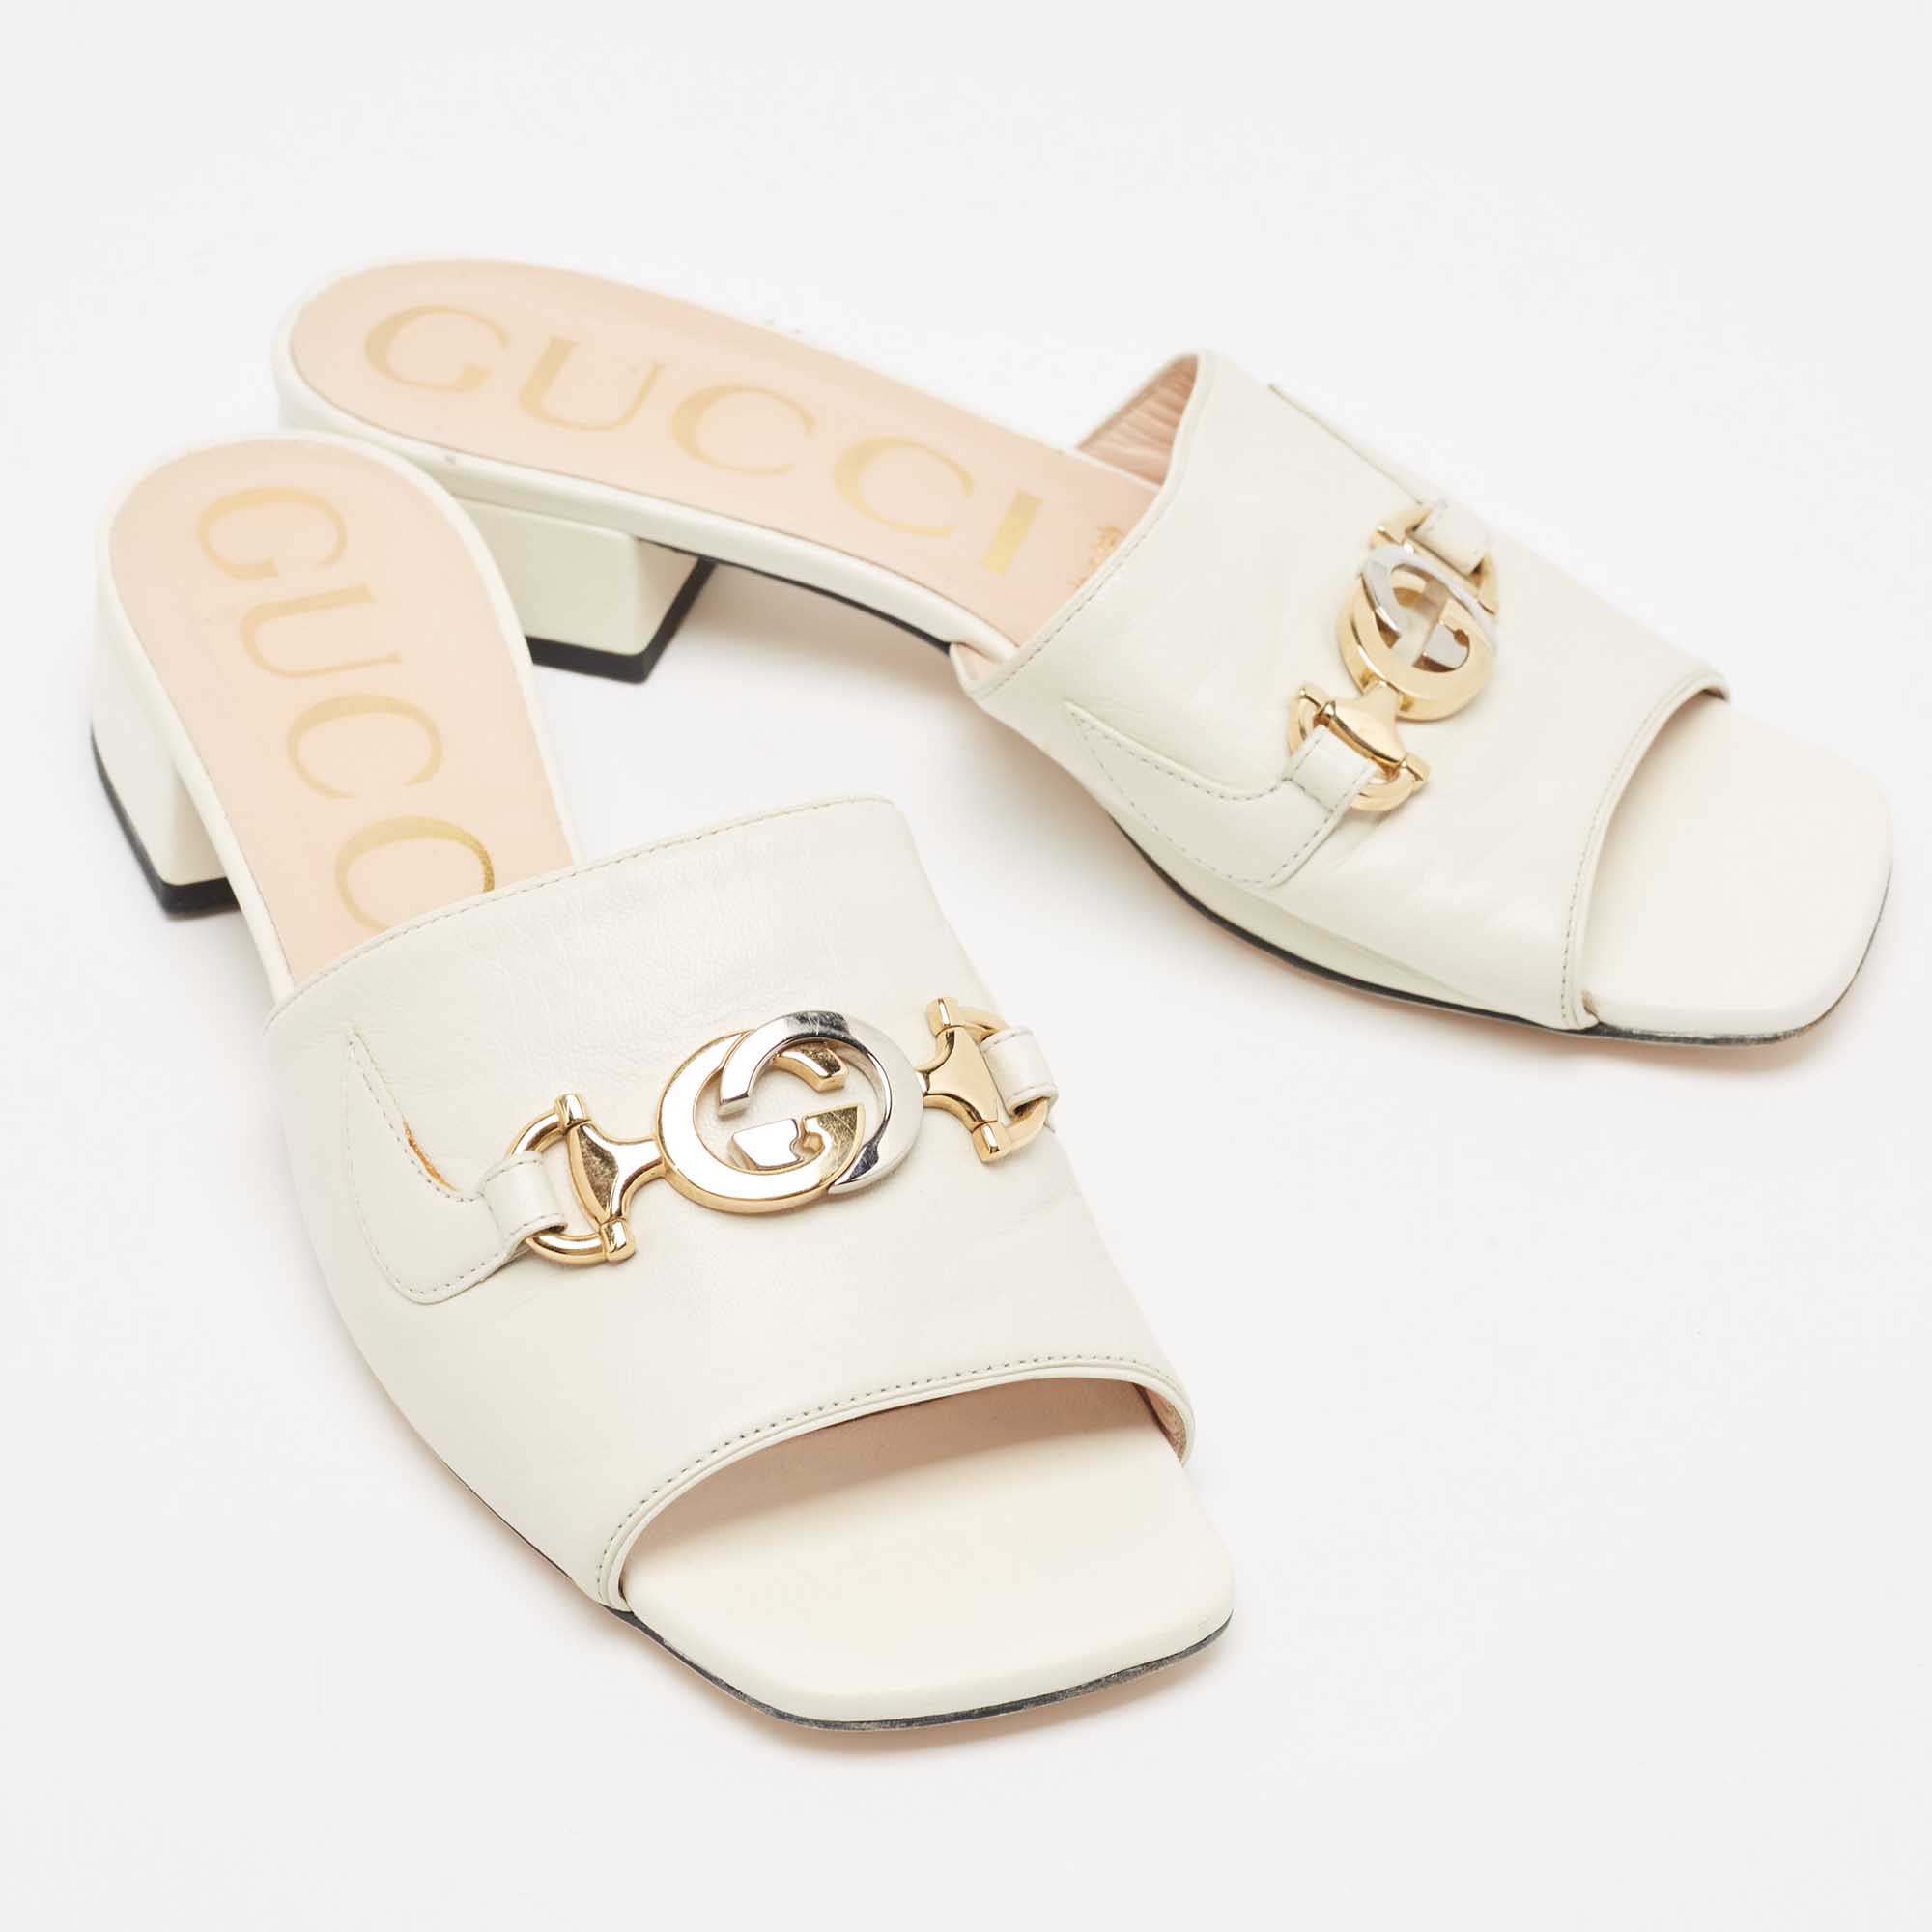 Gucci Off White Leather Zumi Slide Sandals Size 37